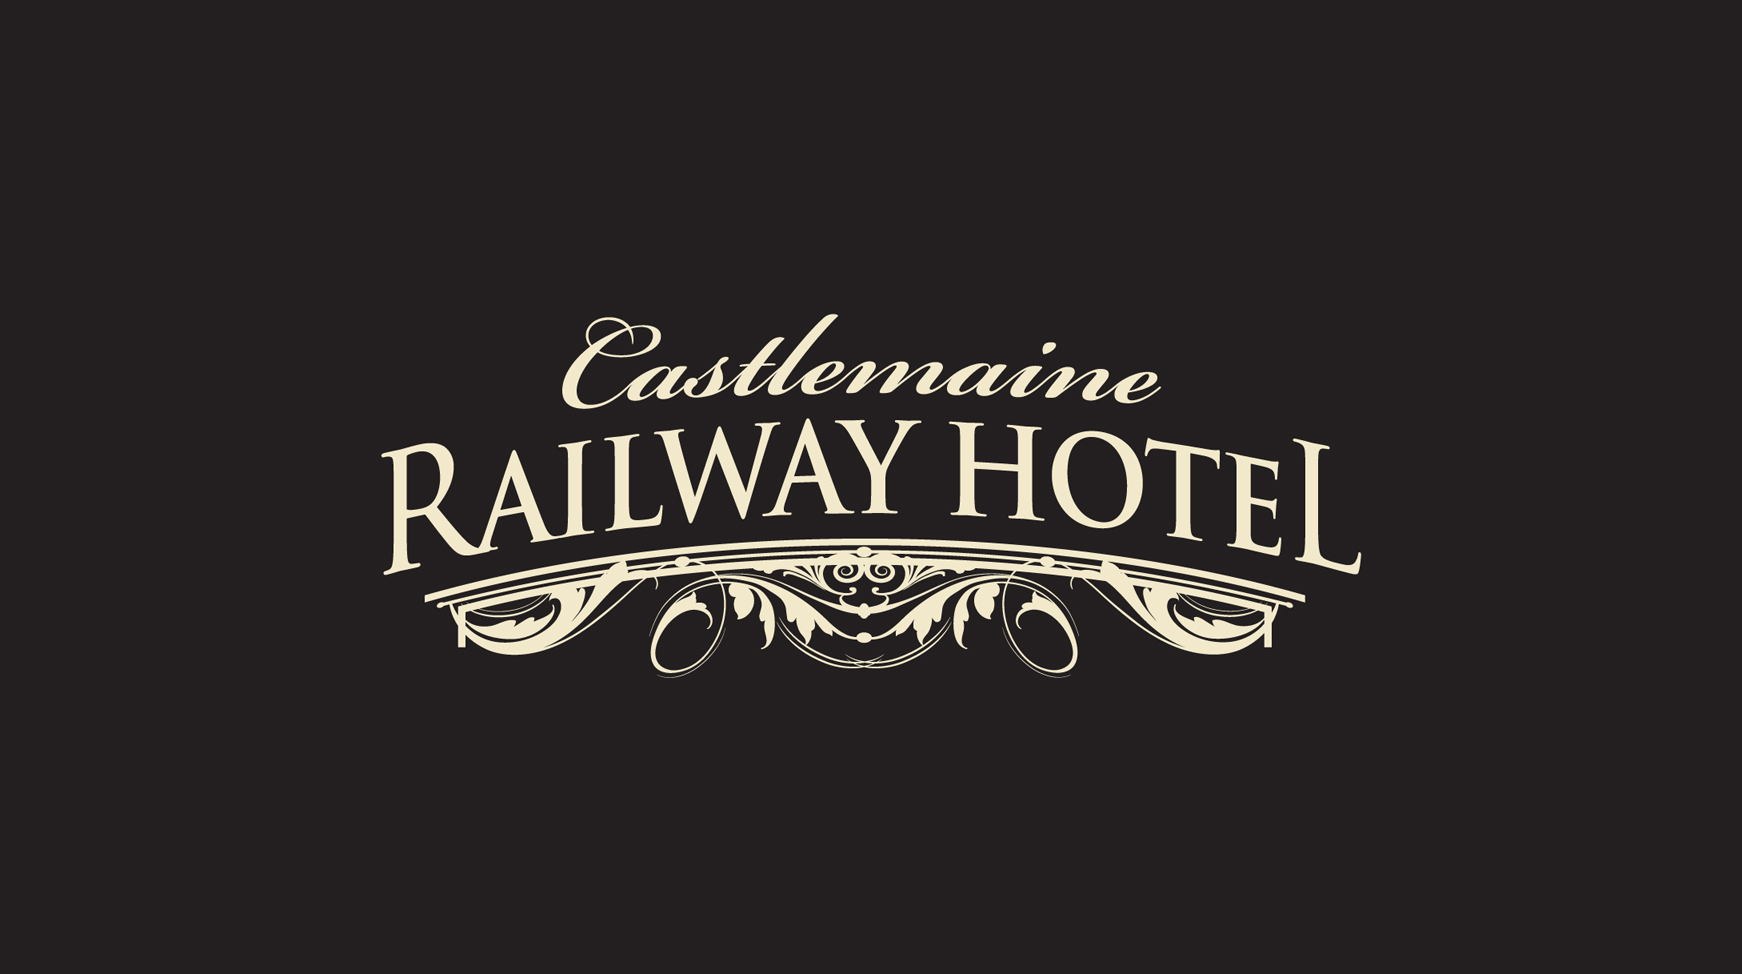 Railway Hotel Castlemaine - Accommodation Adelaide